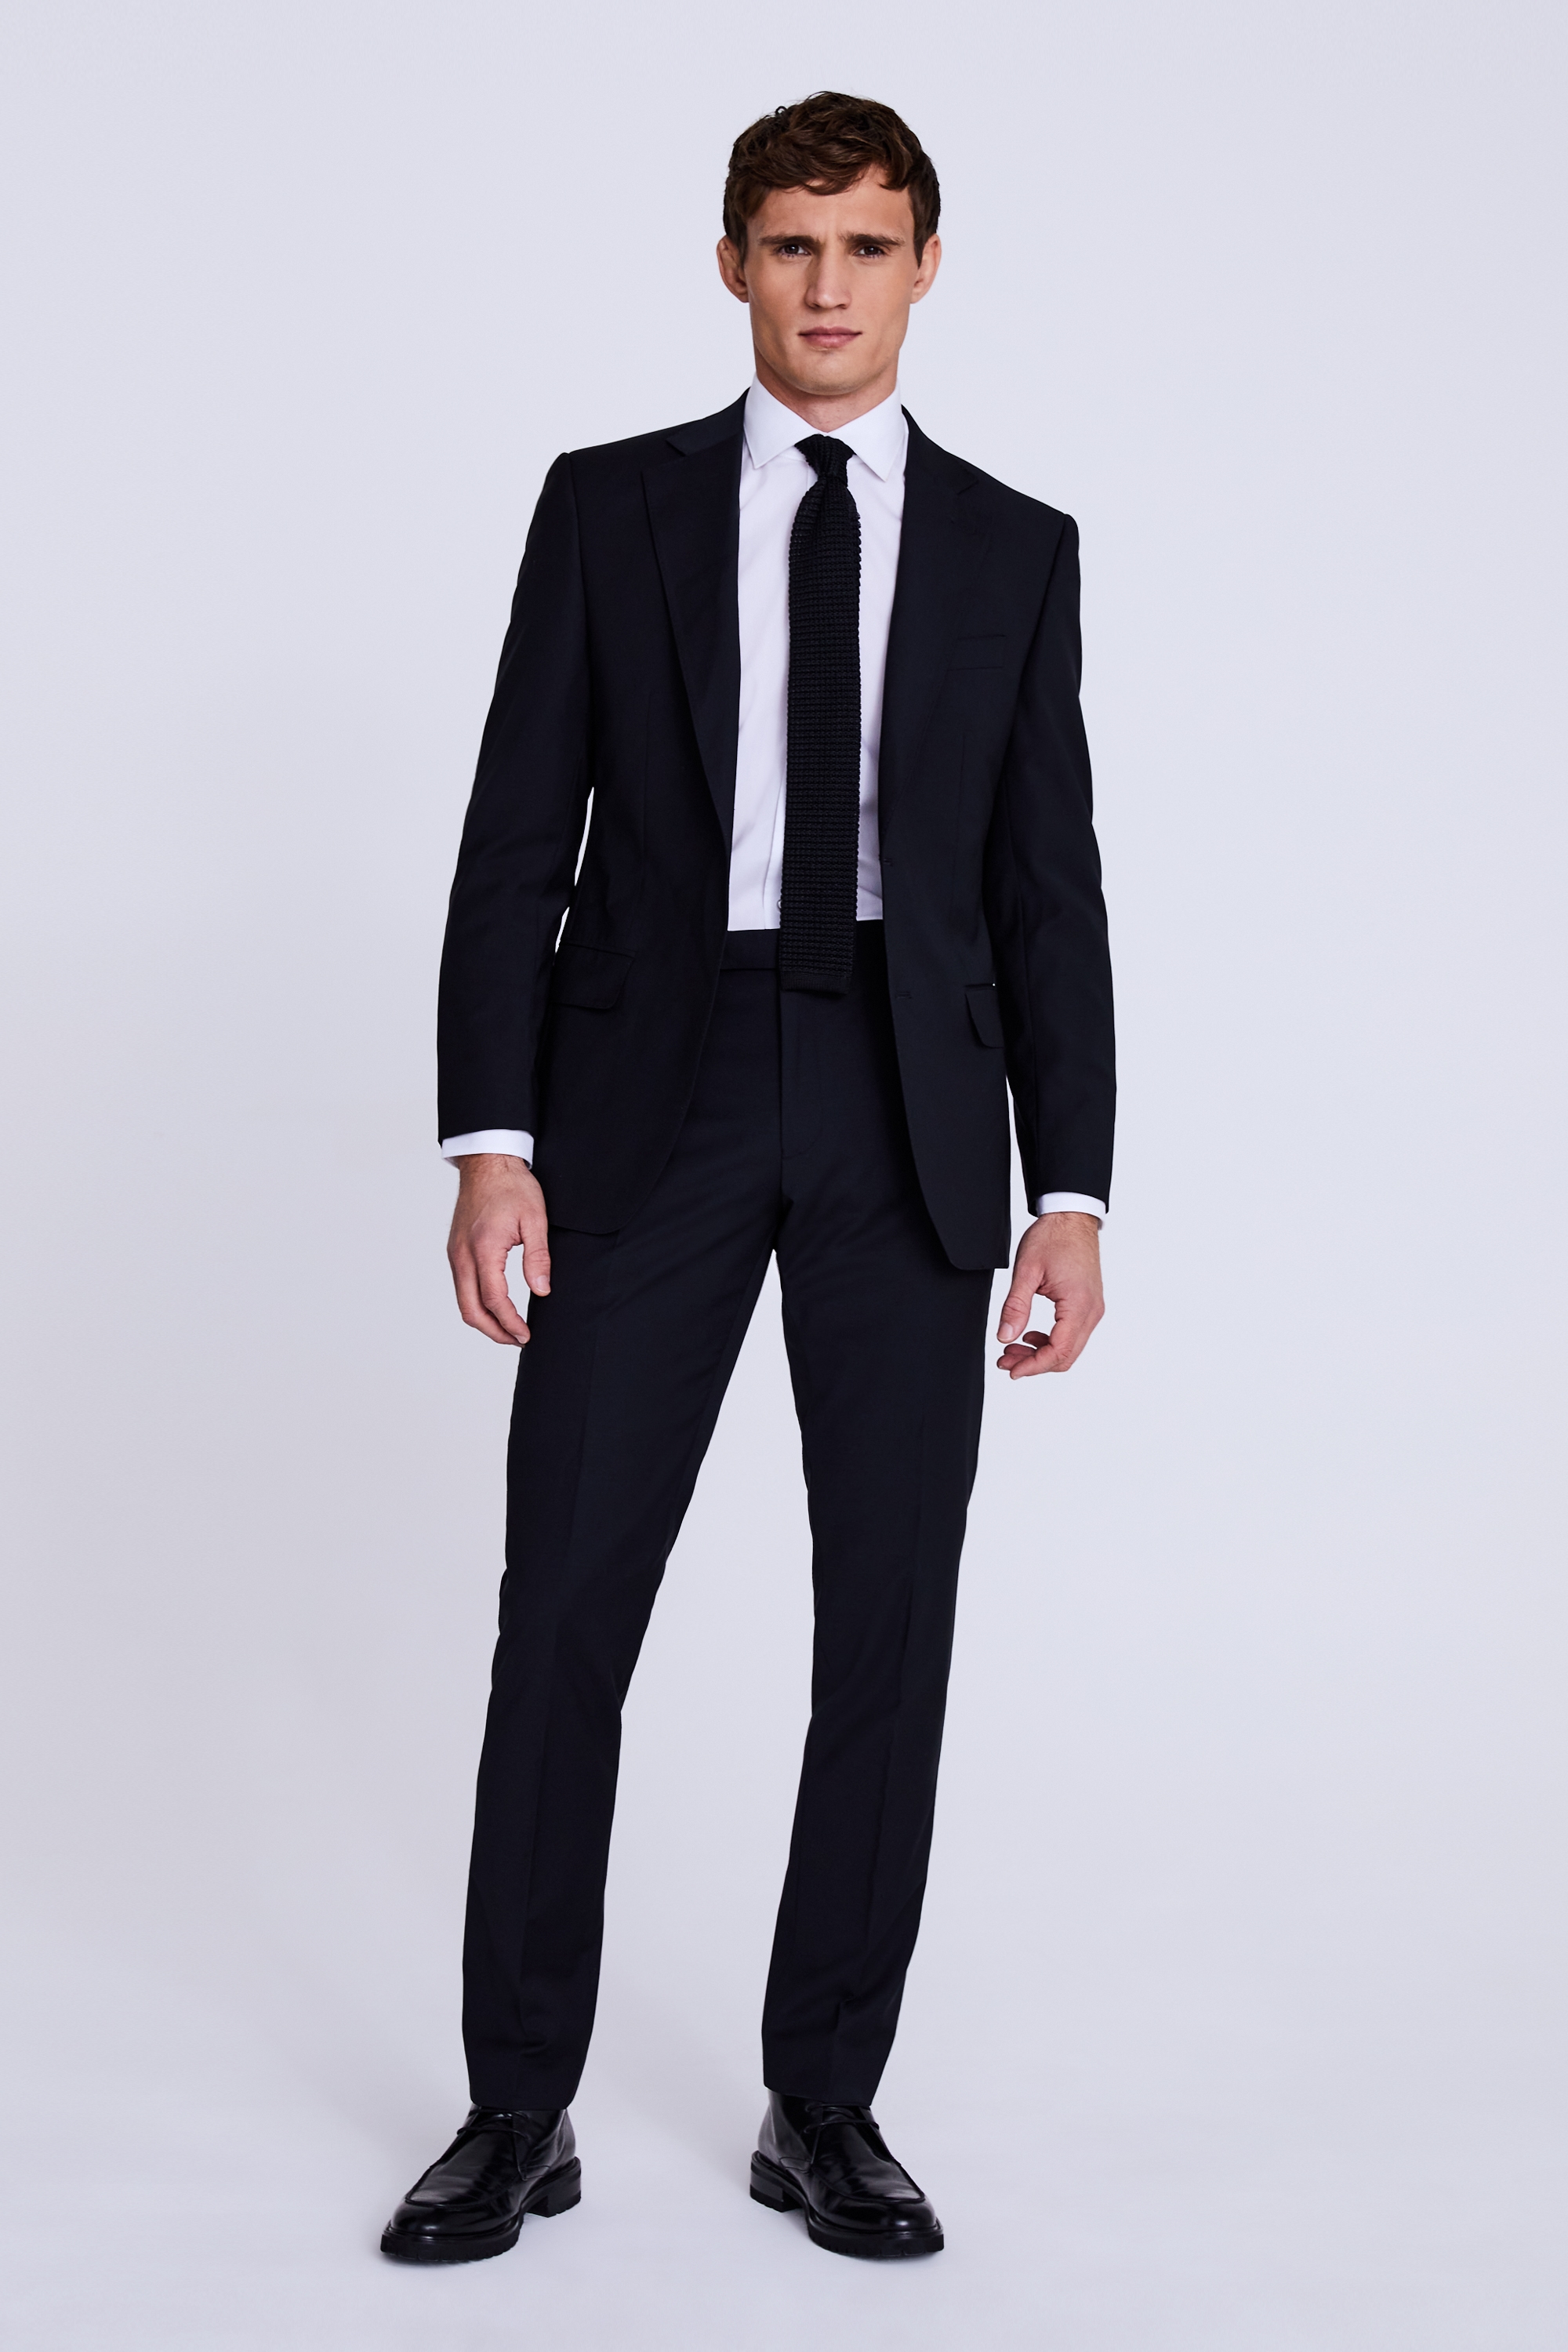 Performance Tailored Fit Black Suit